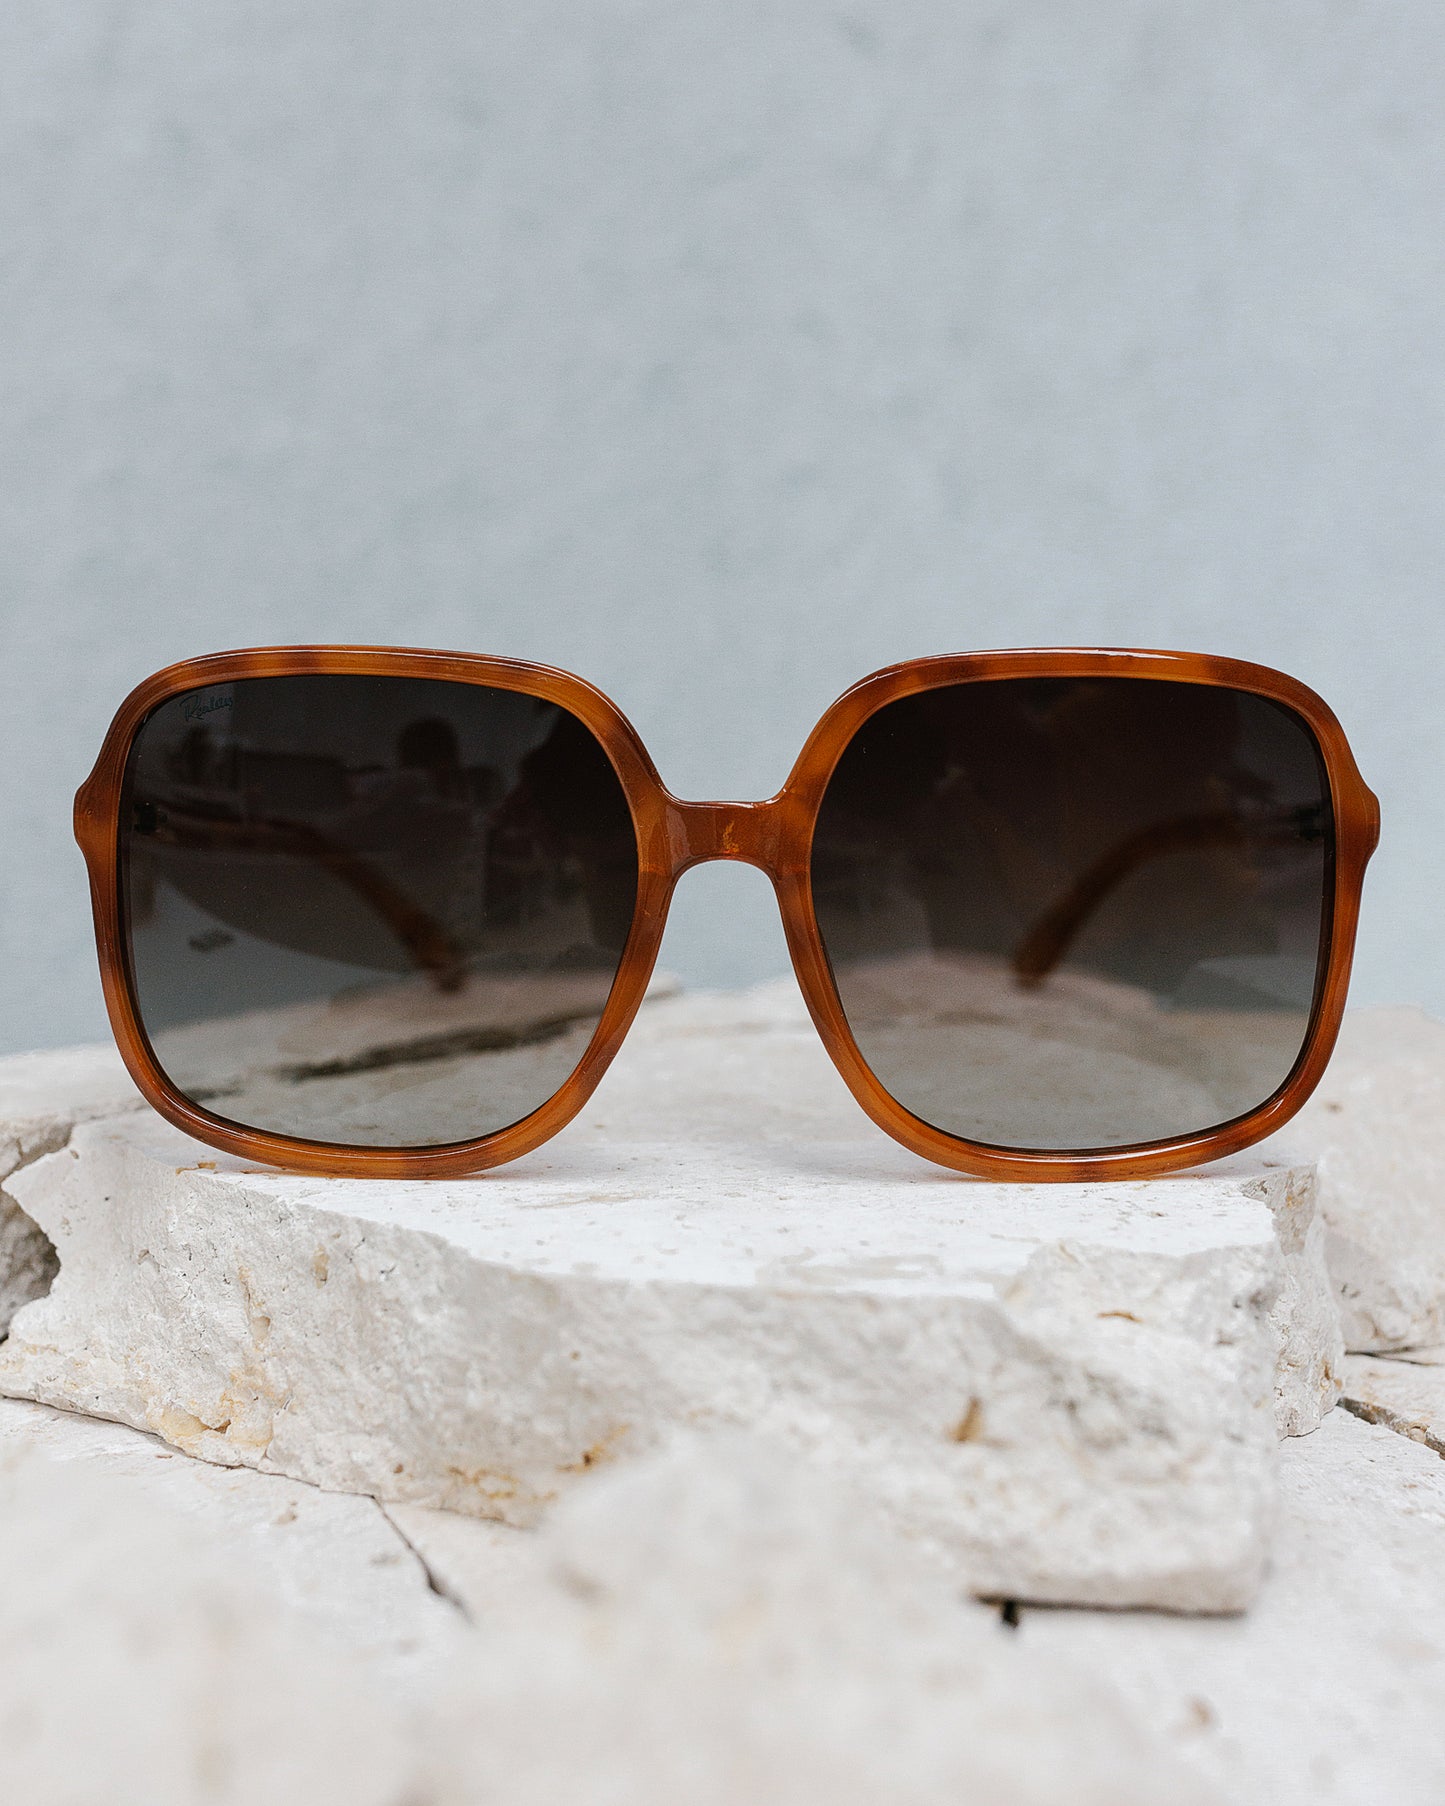 Della Spiga Sunglasses - Vintage Turtle